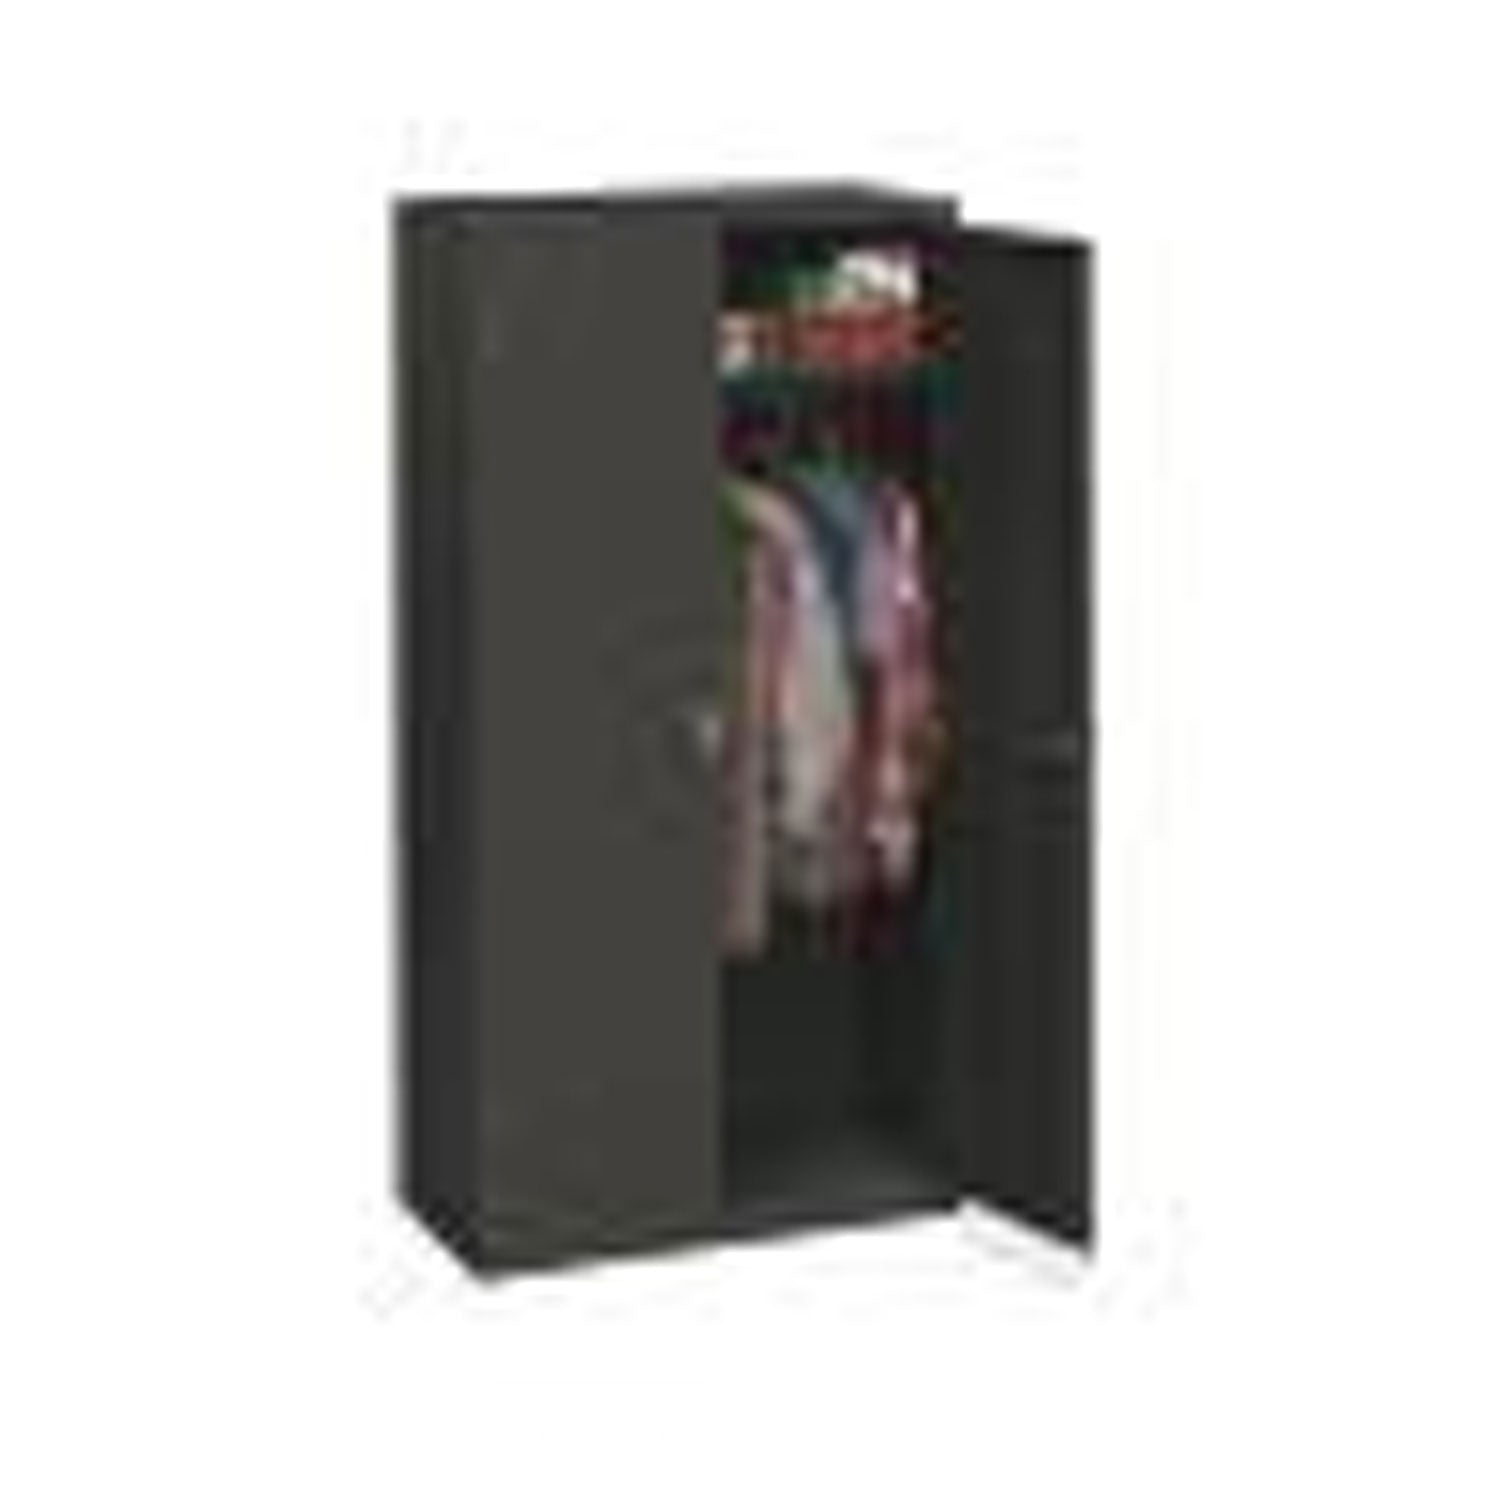 Assembled Storage Cabinet, 36w x 18.13d x 71.75h, Charcoal - 